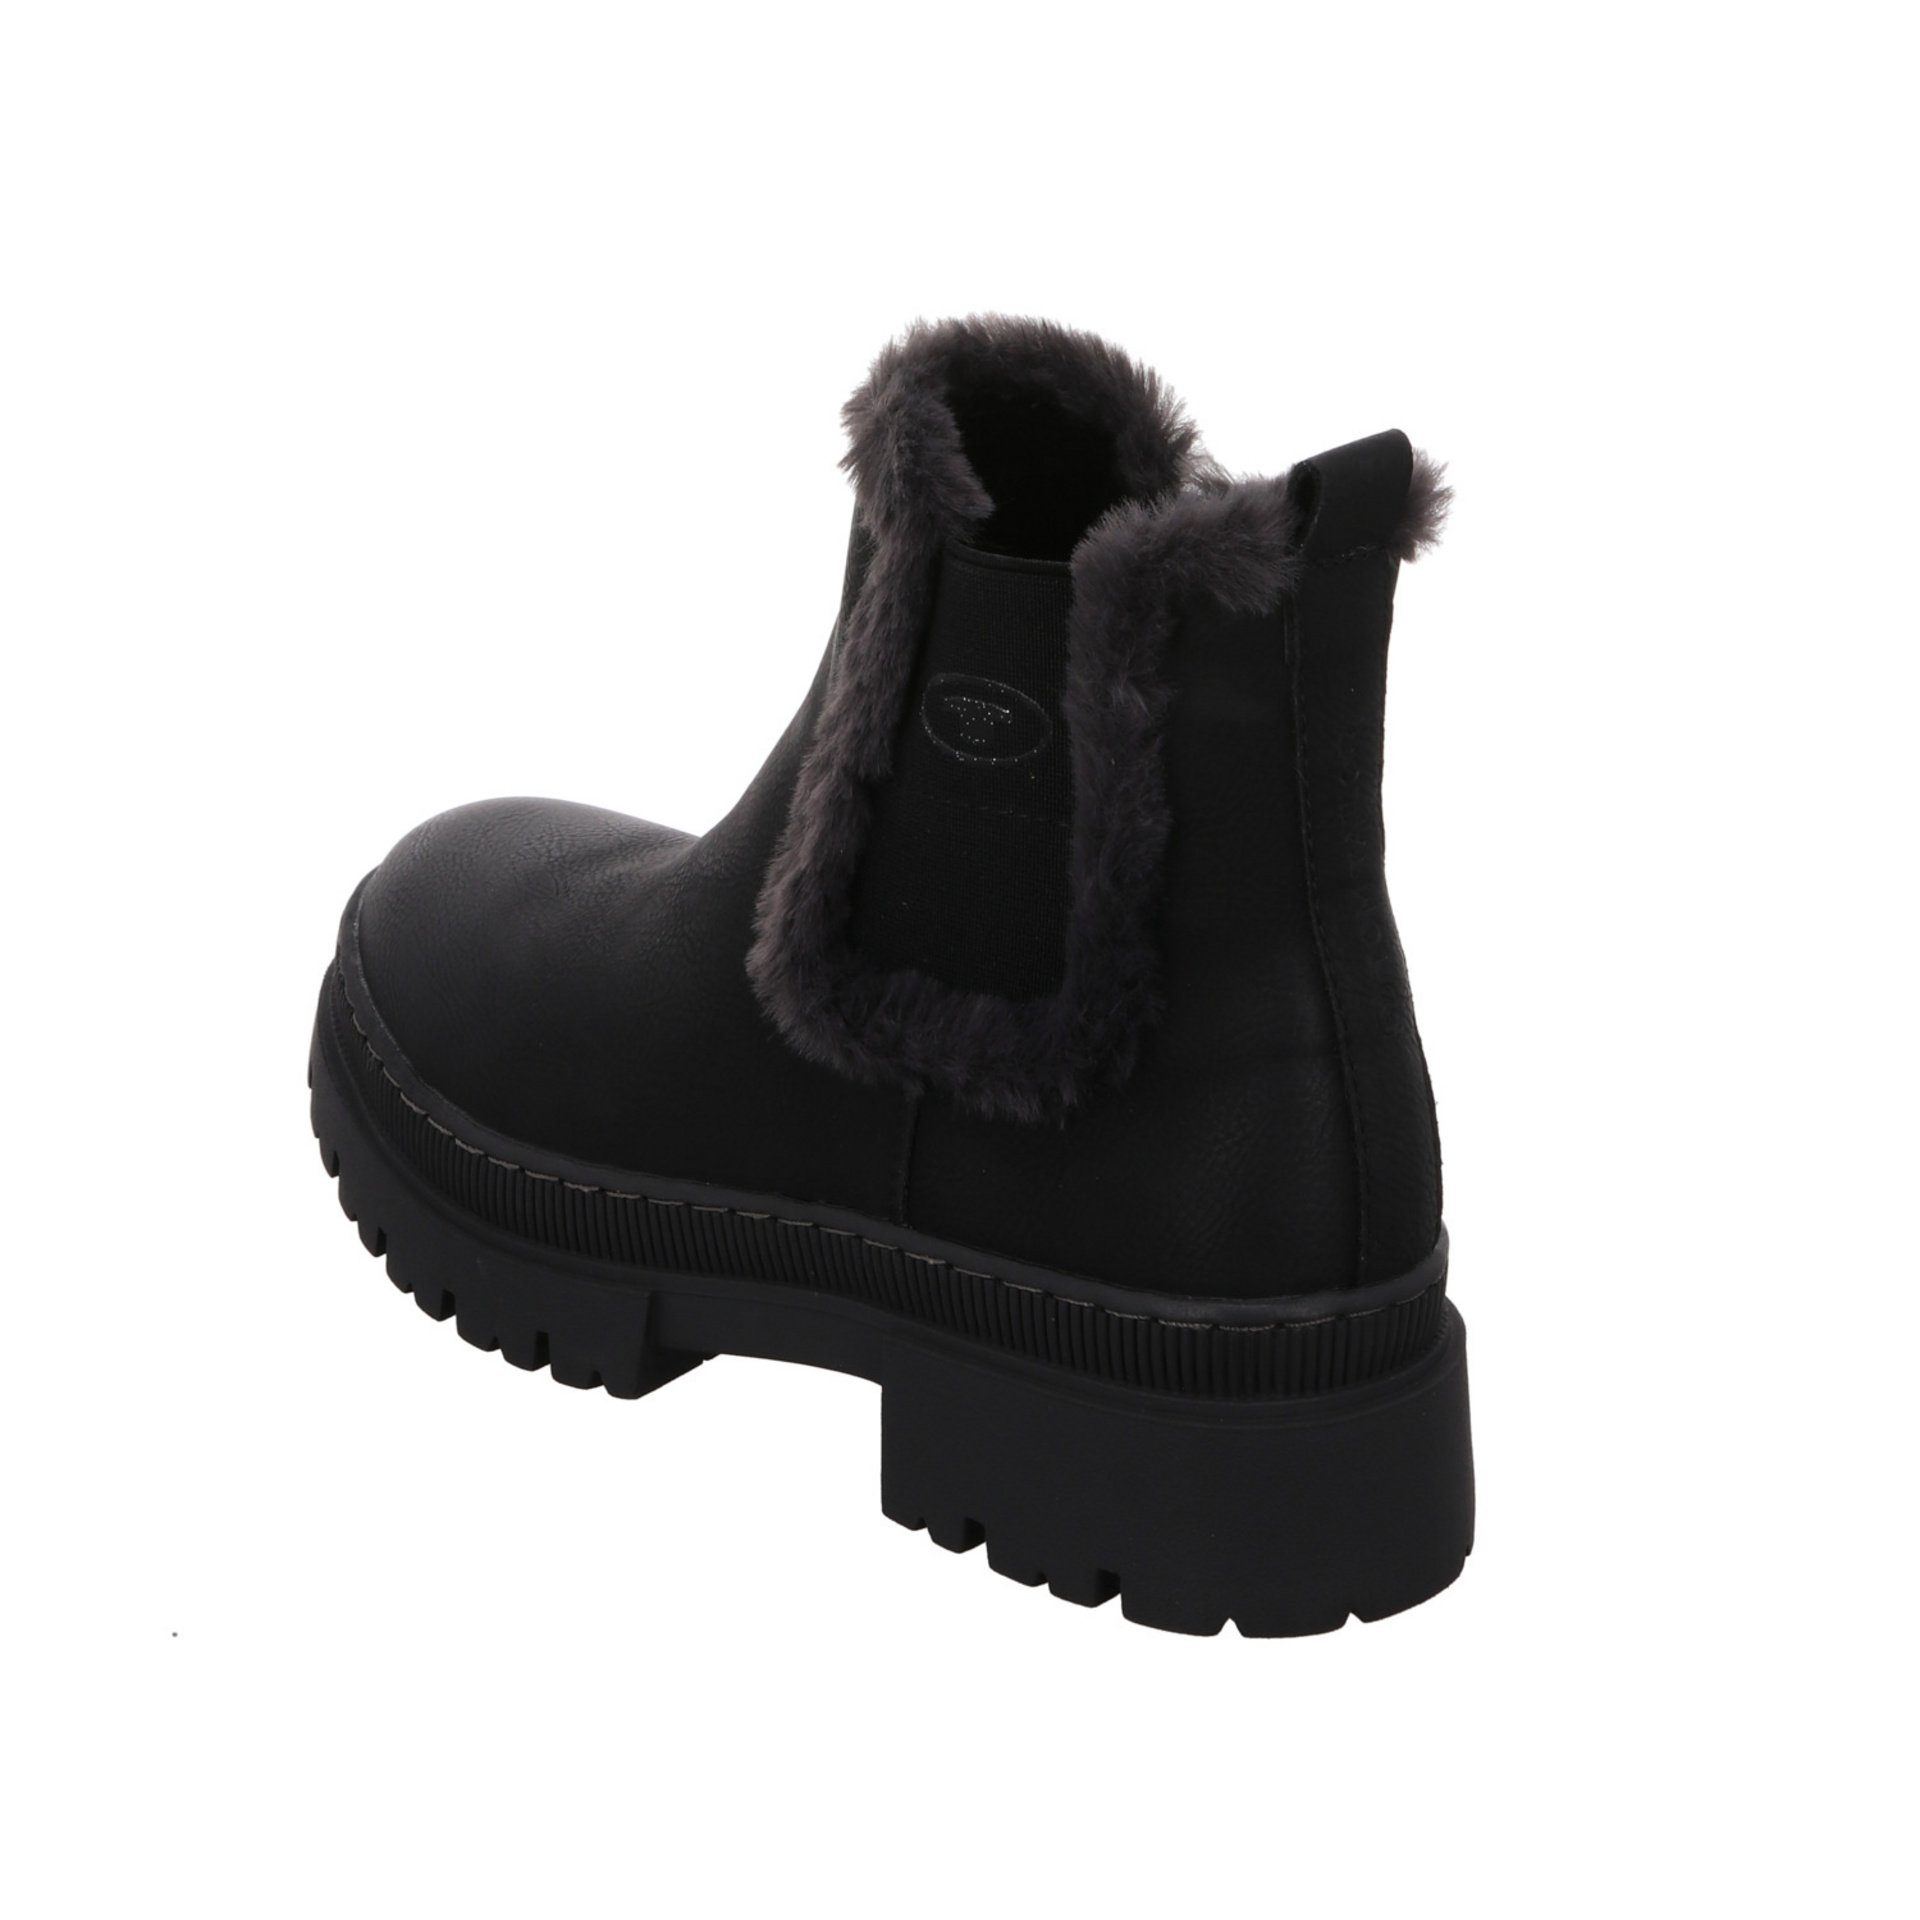 Stiefel Synthetik Boots black Chelsea Schuhe TOM Damen TAILOR Stiefel